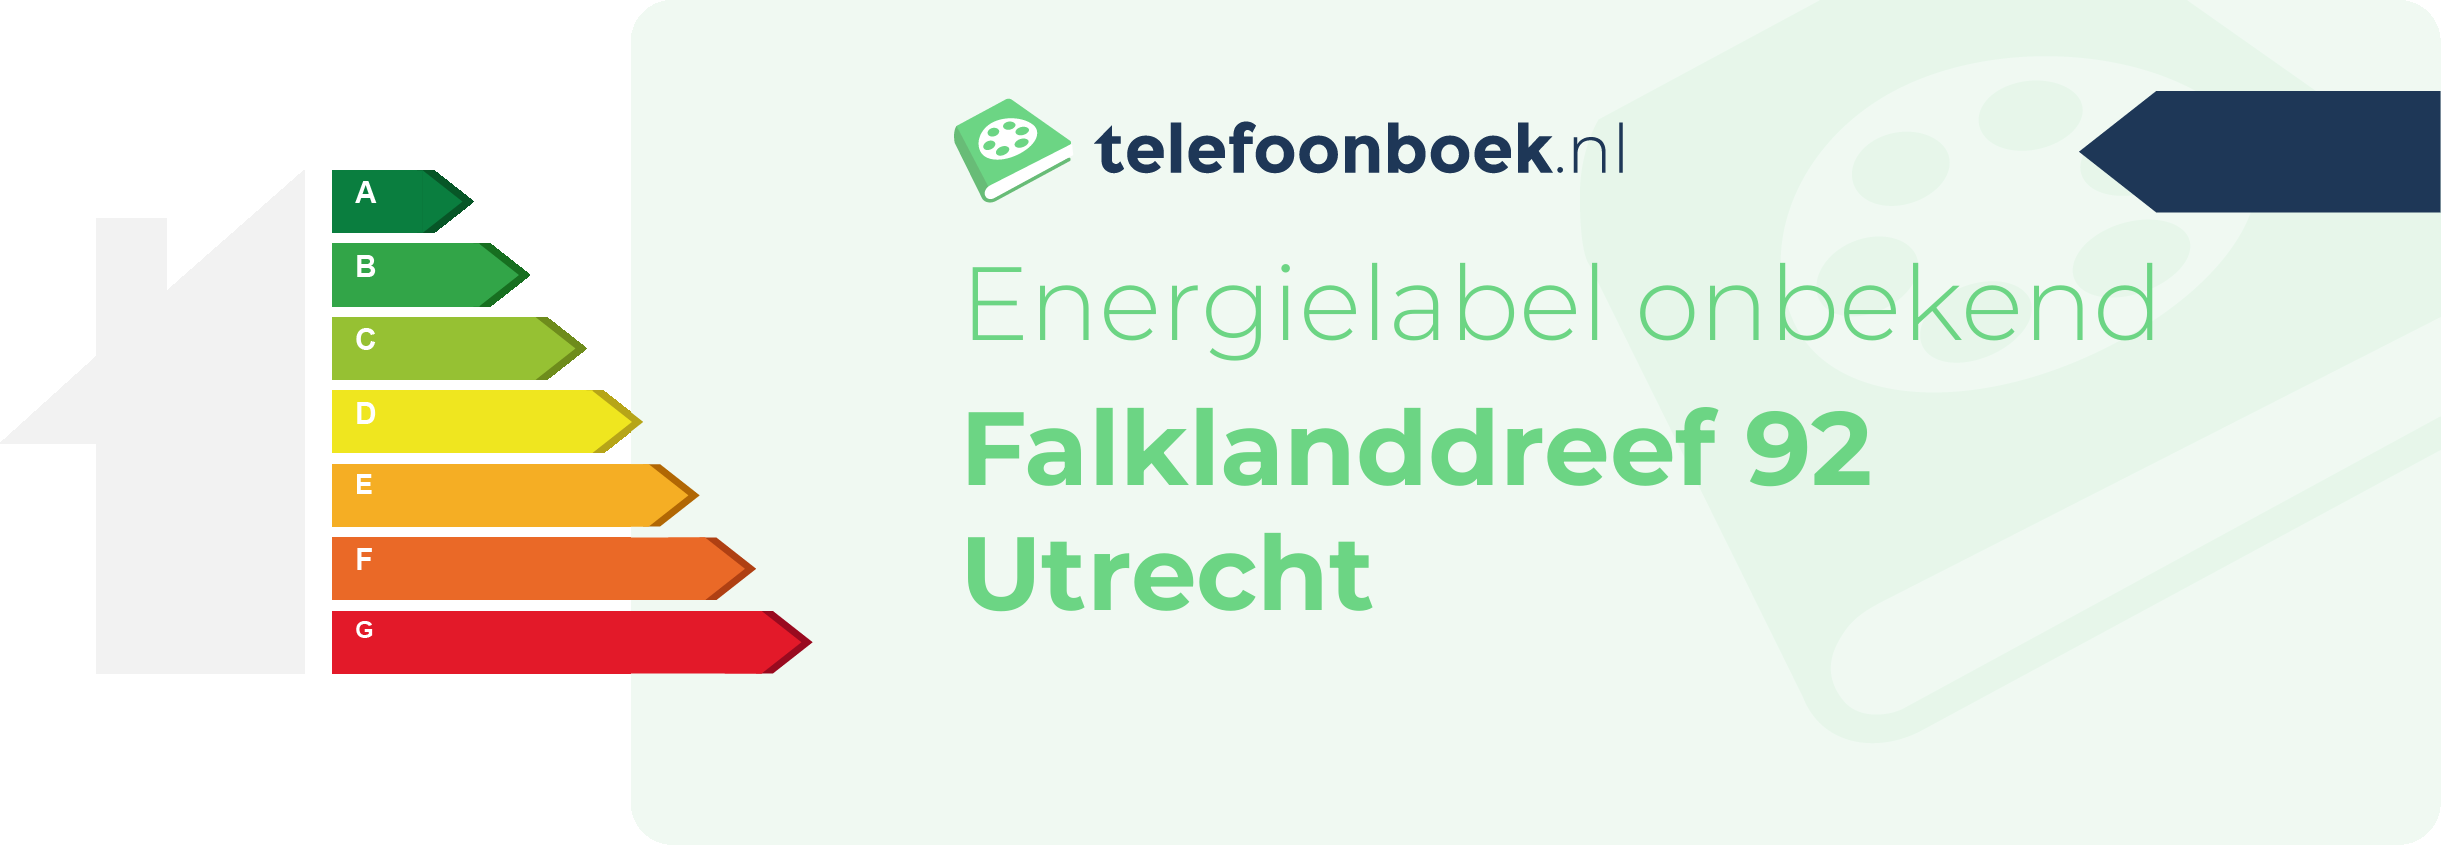 Energielabel Falklanddreef 92 Utrecht